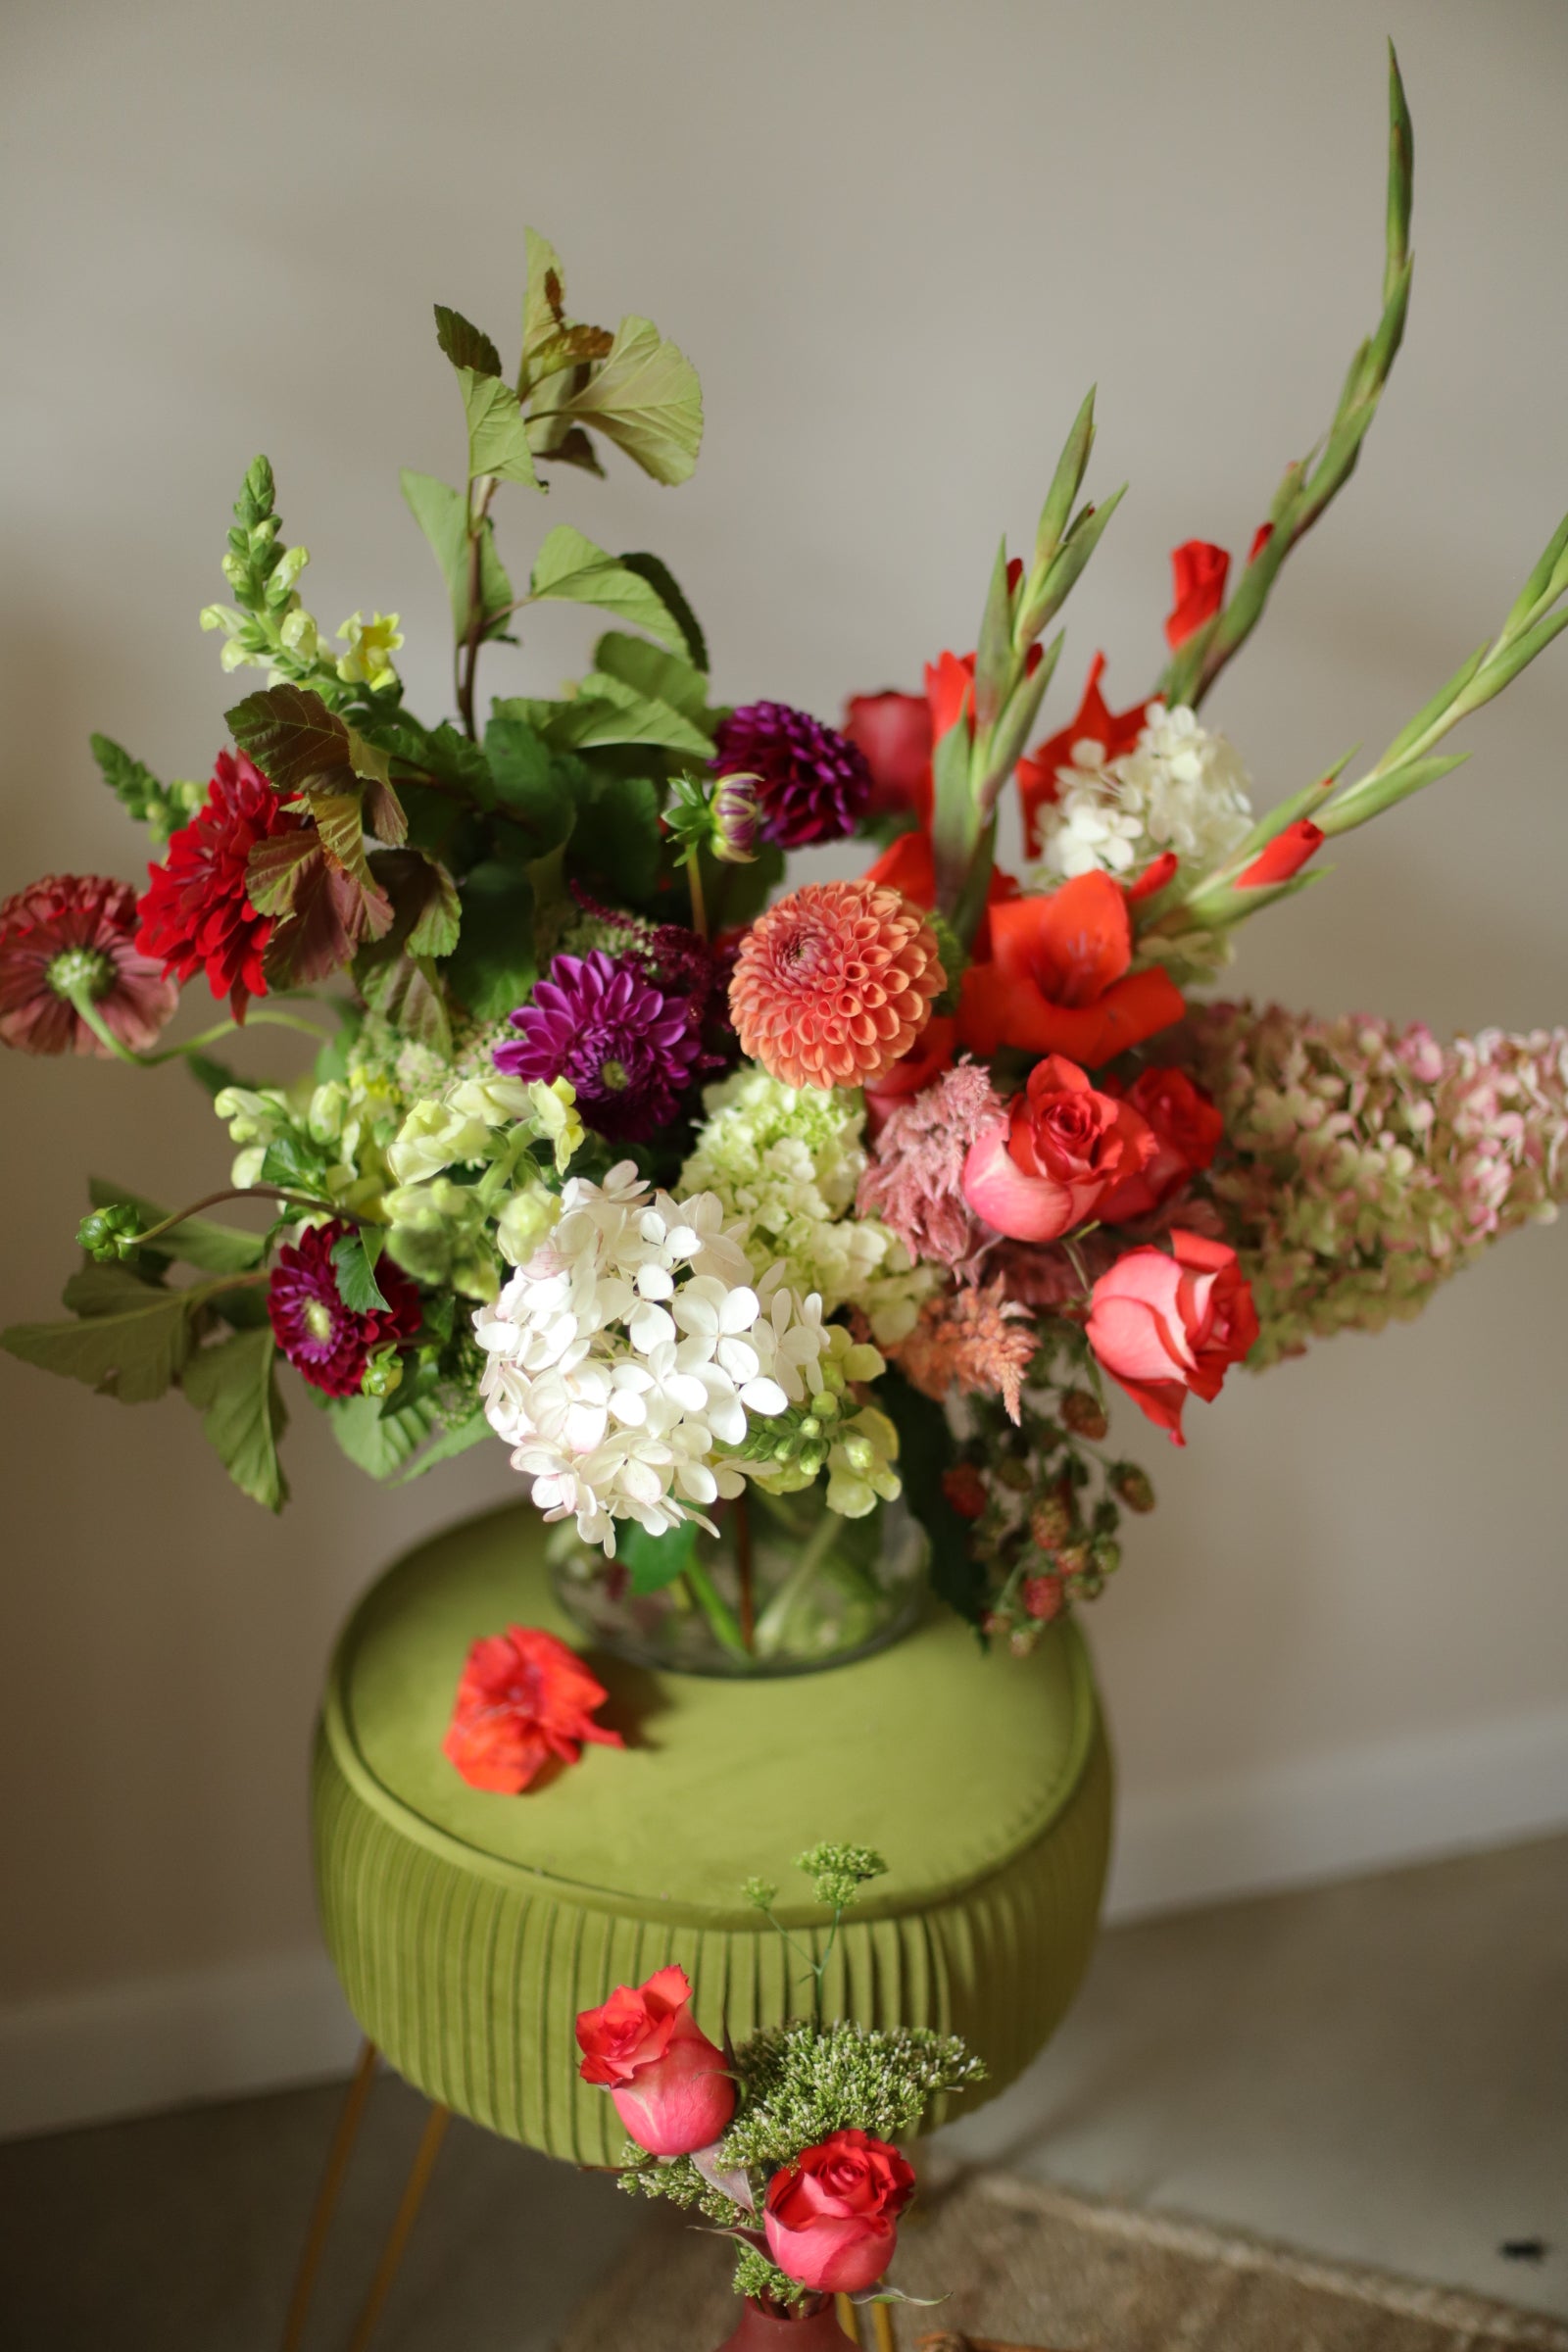 summer flower arrangement for delivery includes dahlias, hydrangeas, zinnias, and gladiolus